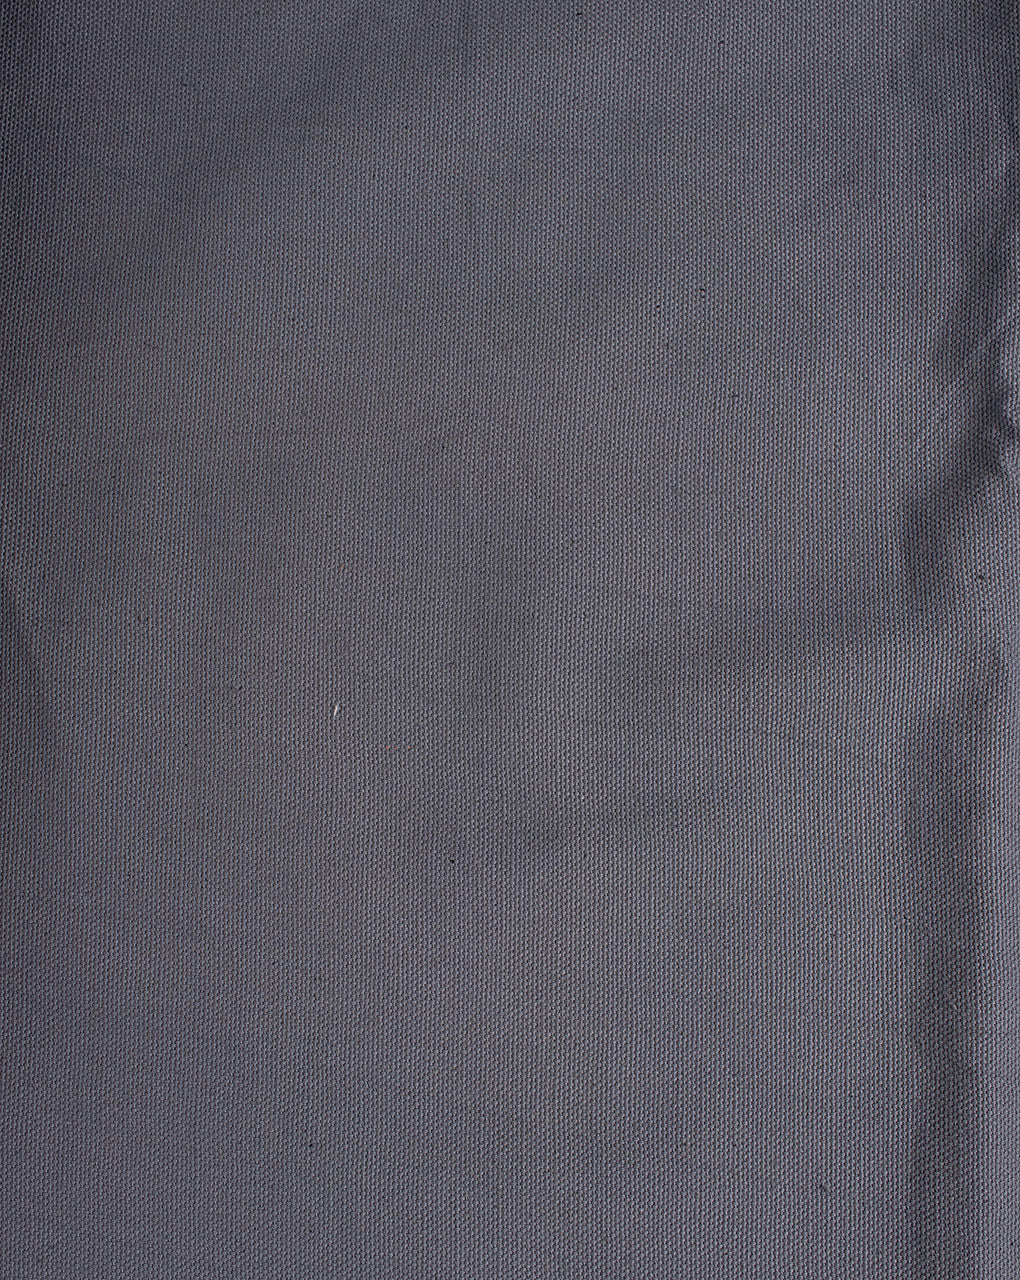 Grey Plain Cotton Duck Fabric